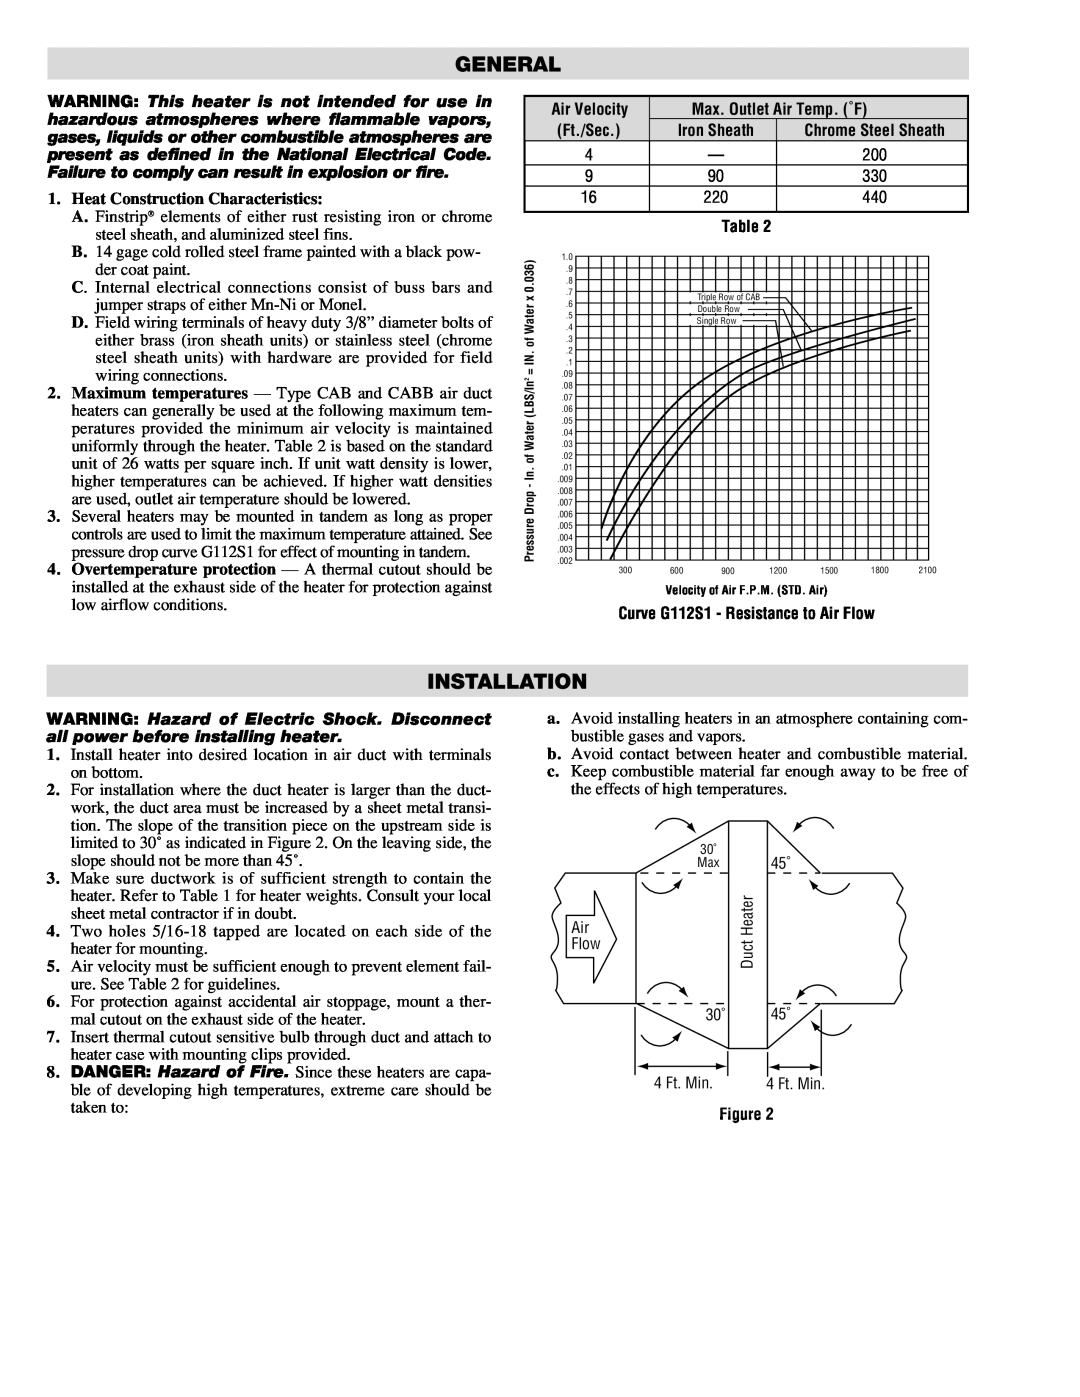 Chromalox CAB specifications General, Installation, Heat Construction Characteristics 